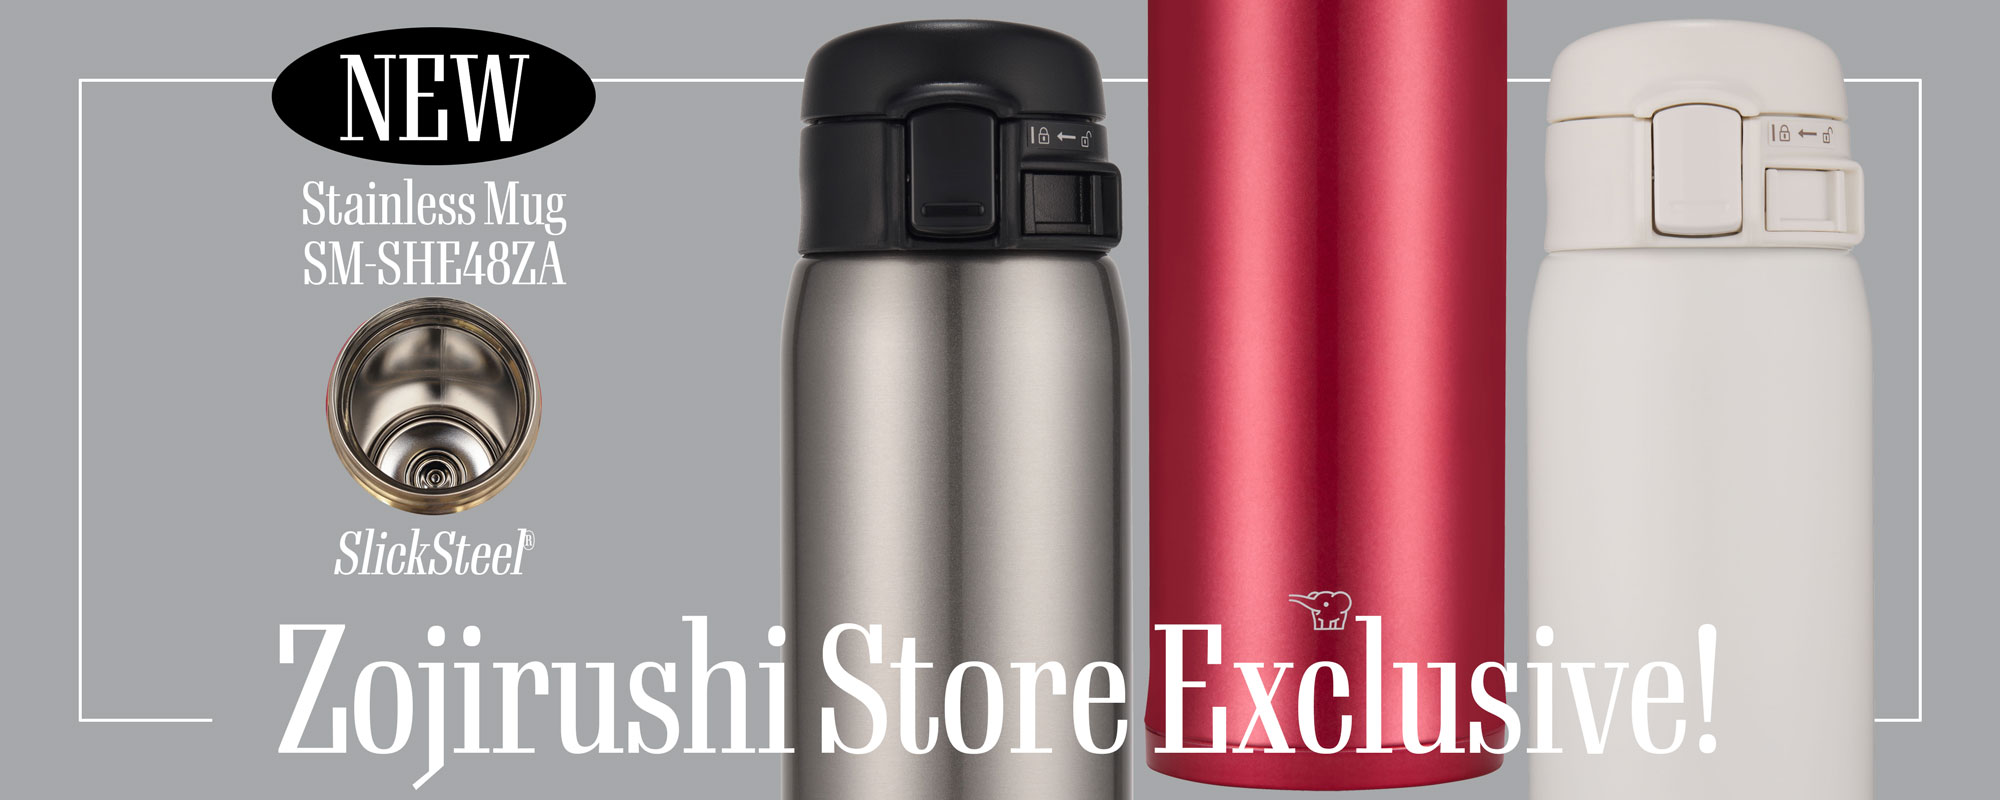 Zojirushi Store Exclusive!